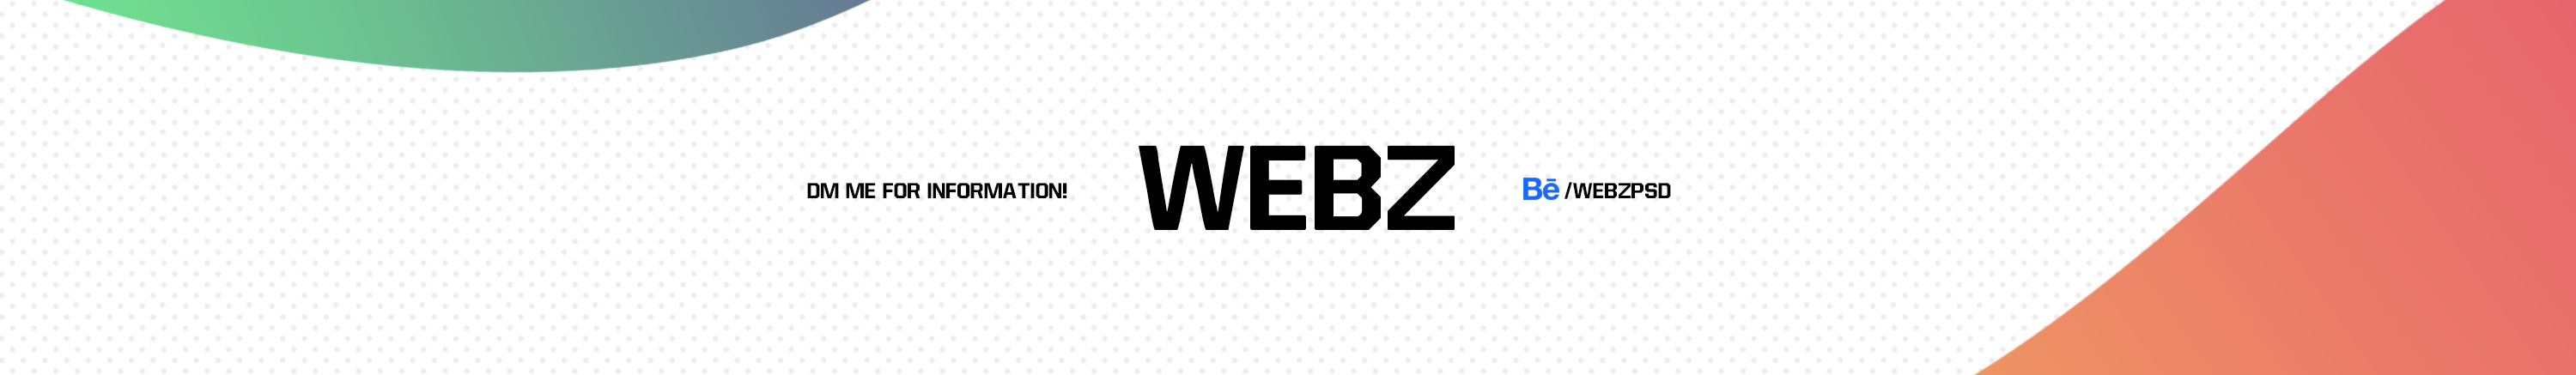 Webz Designs's profile banner